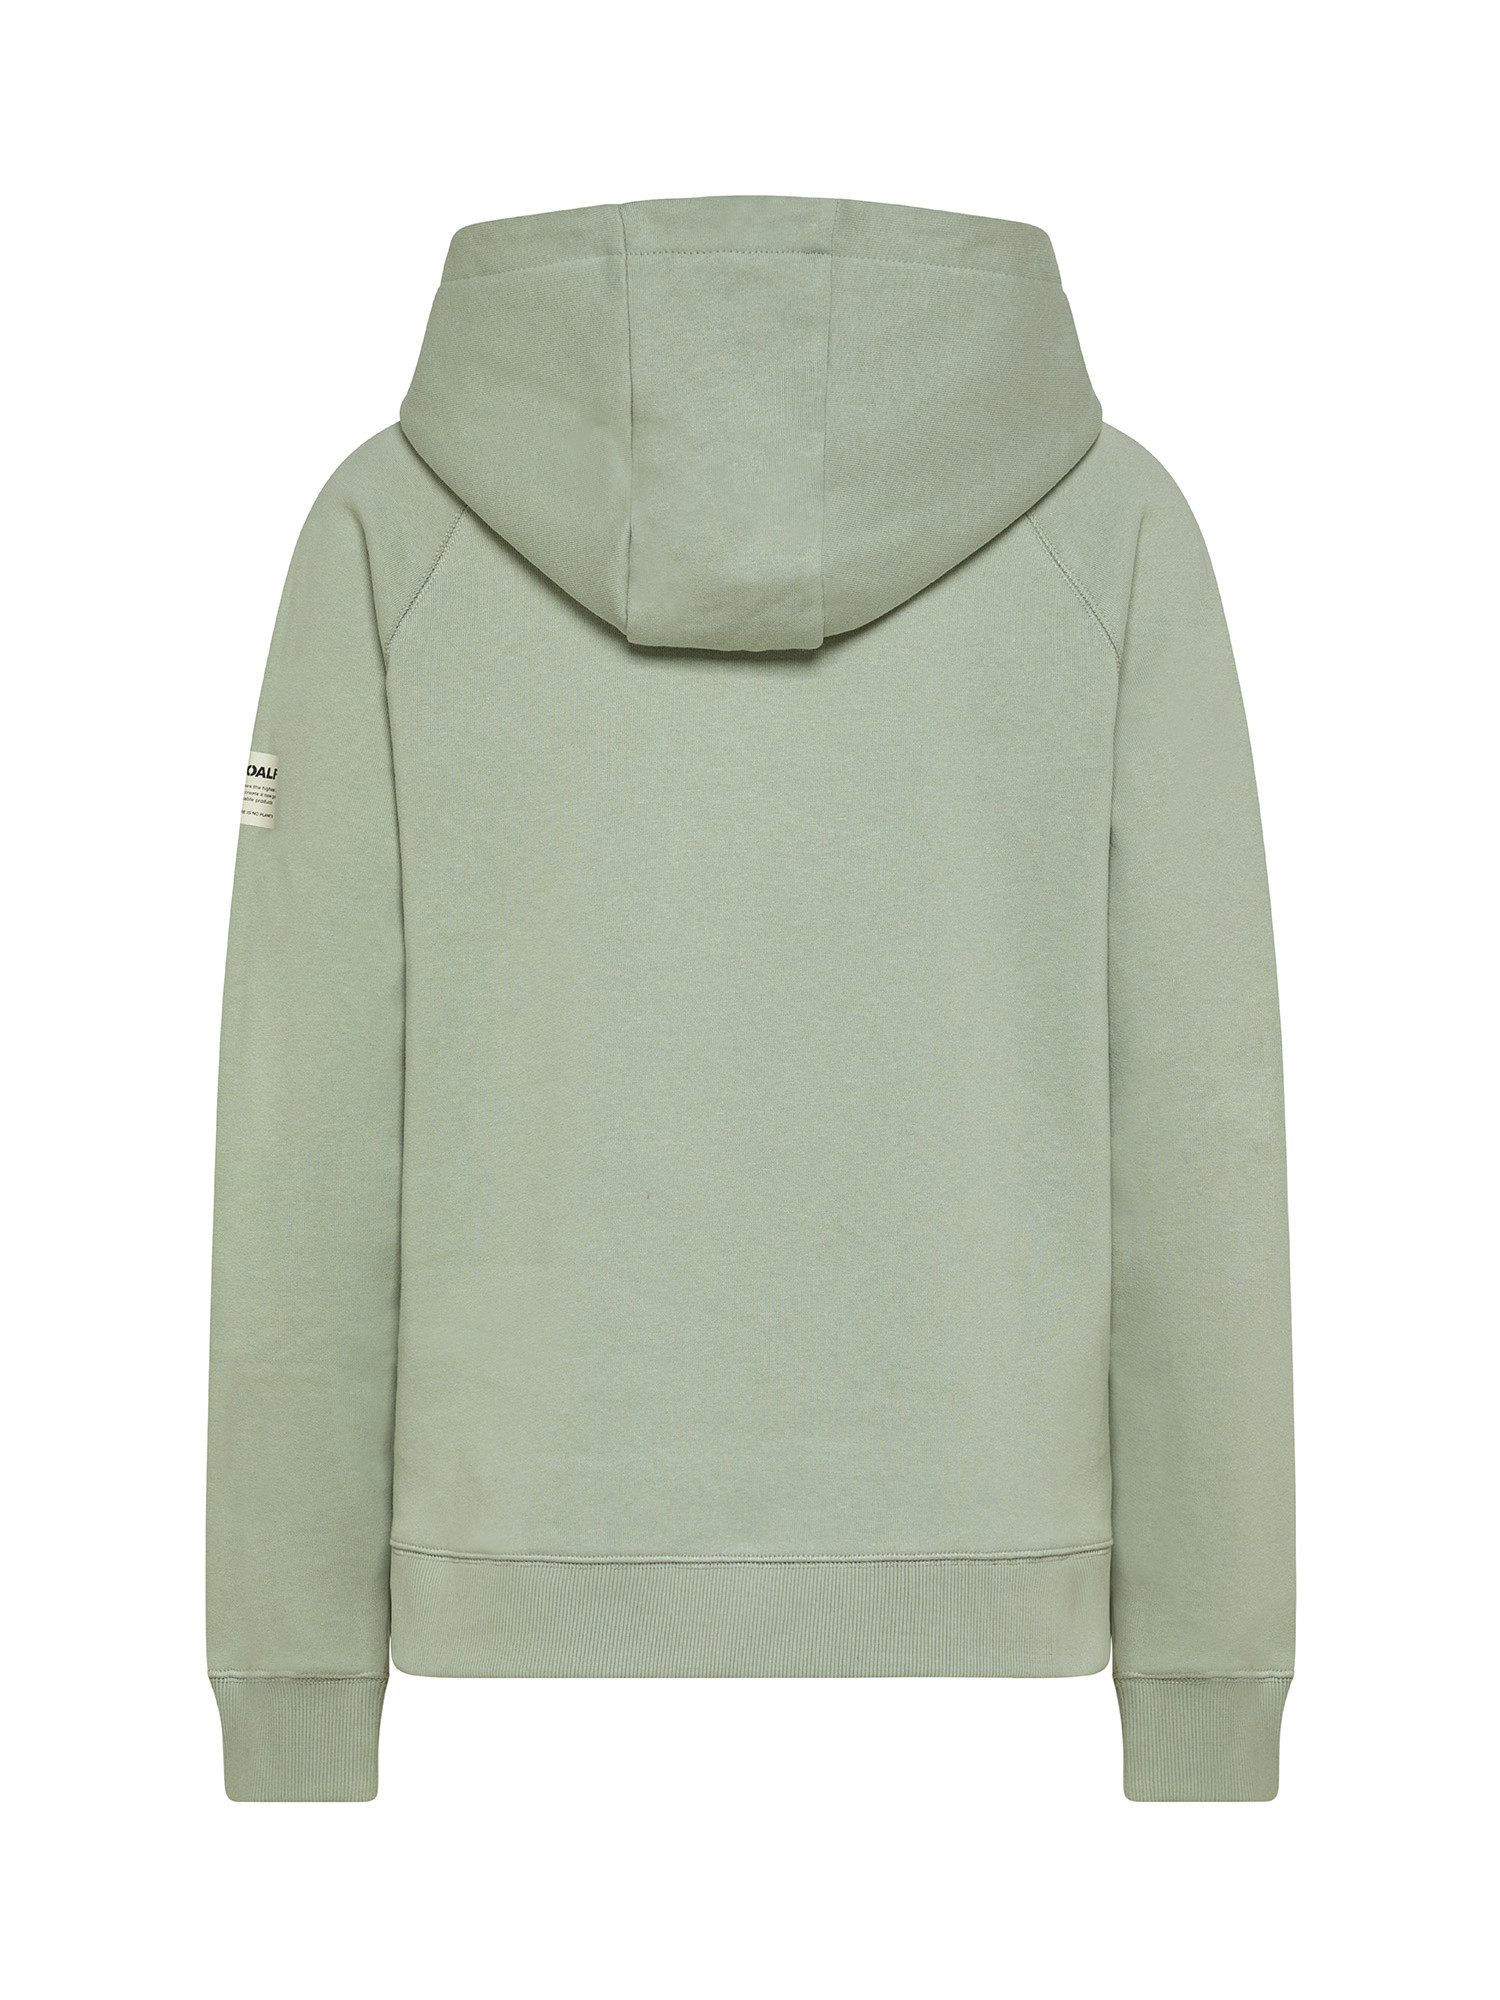 Ecoalf - Plin sweatshirt with print, Light Green, large image number 1